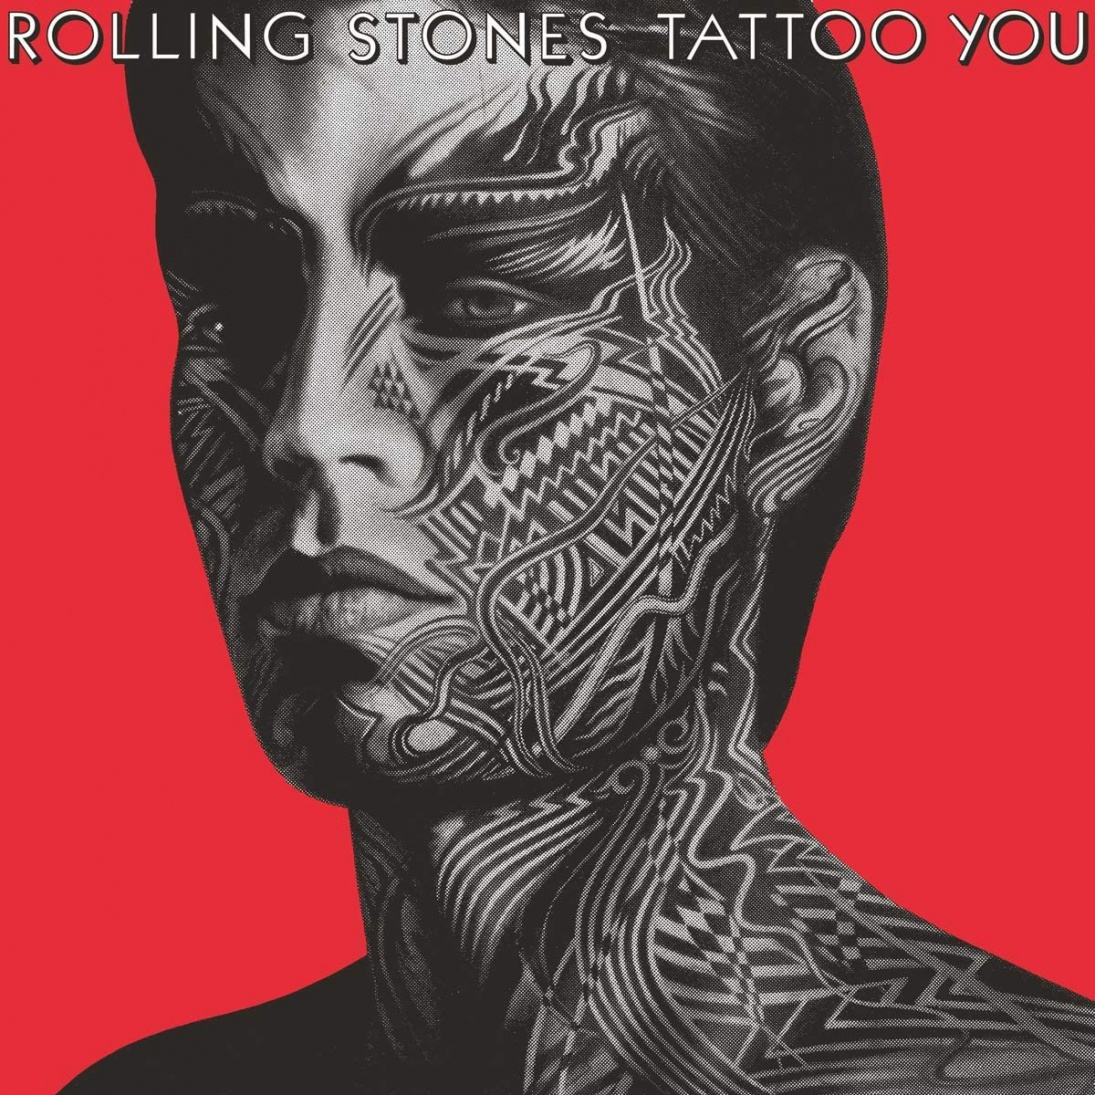 The Rolling Stones Tattoo You Vinyl LP (180 DEG. Half Speed Remastered)